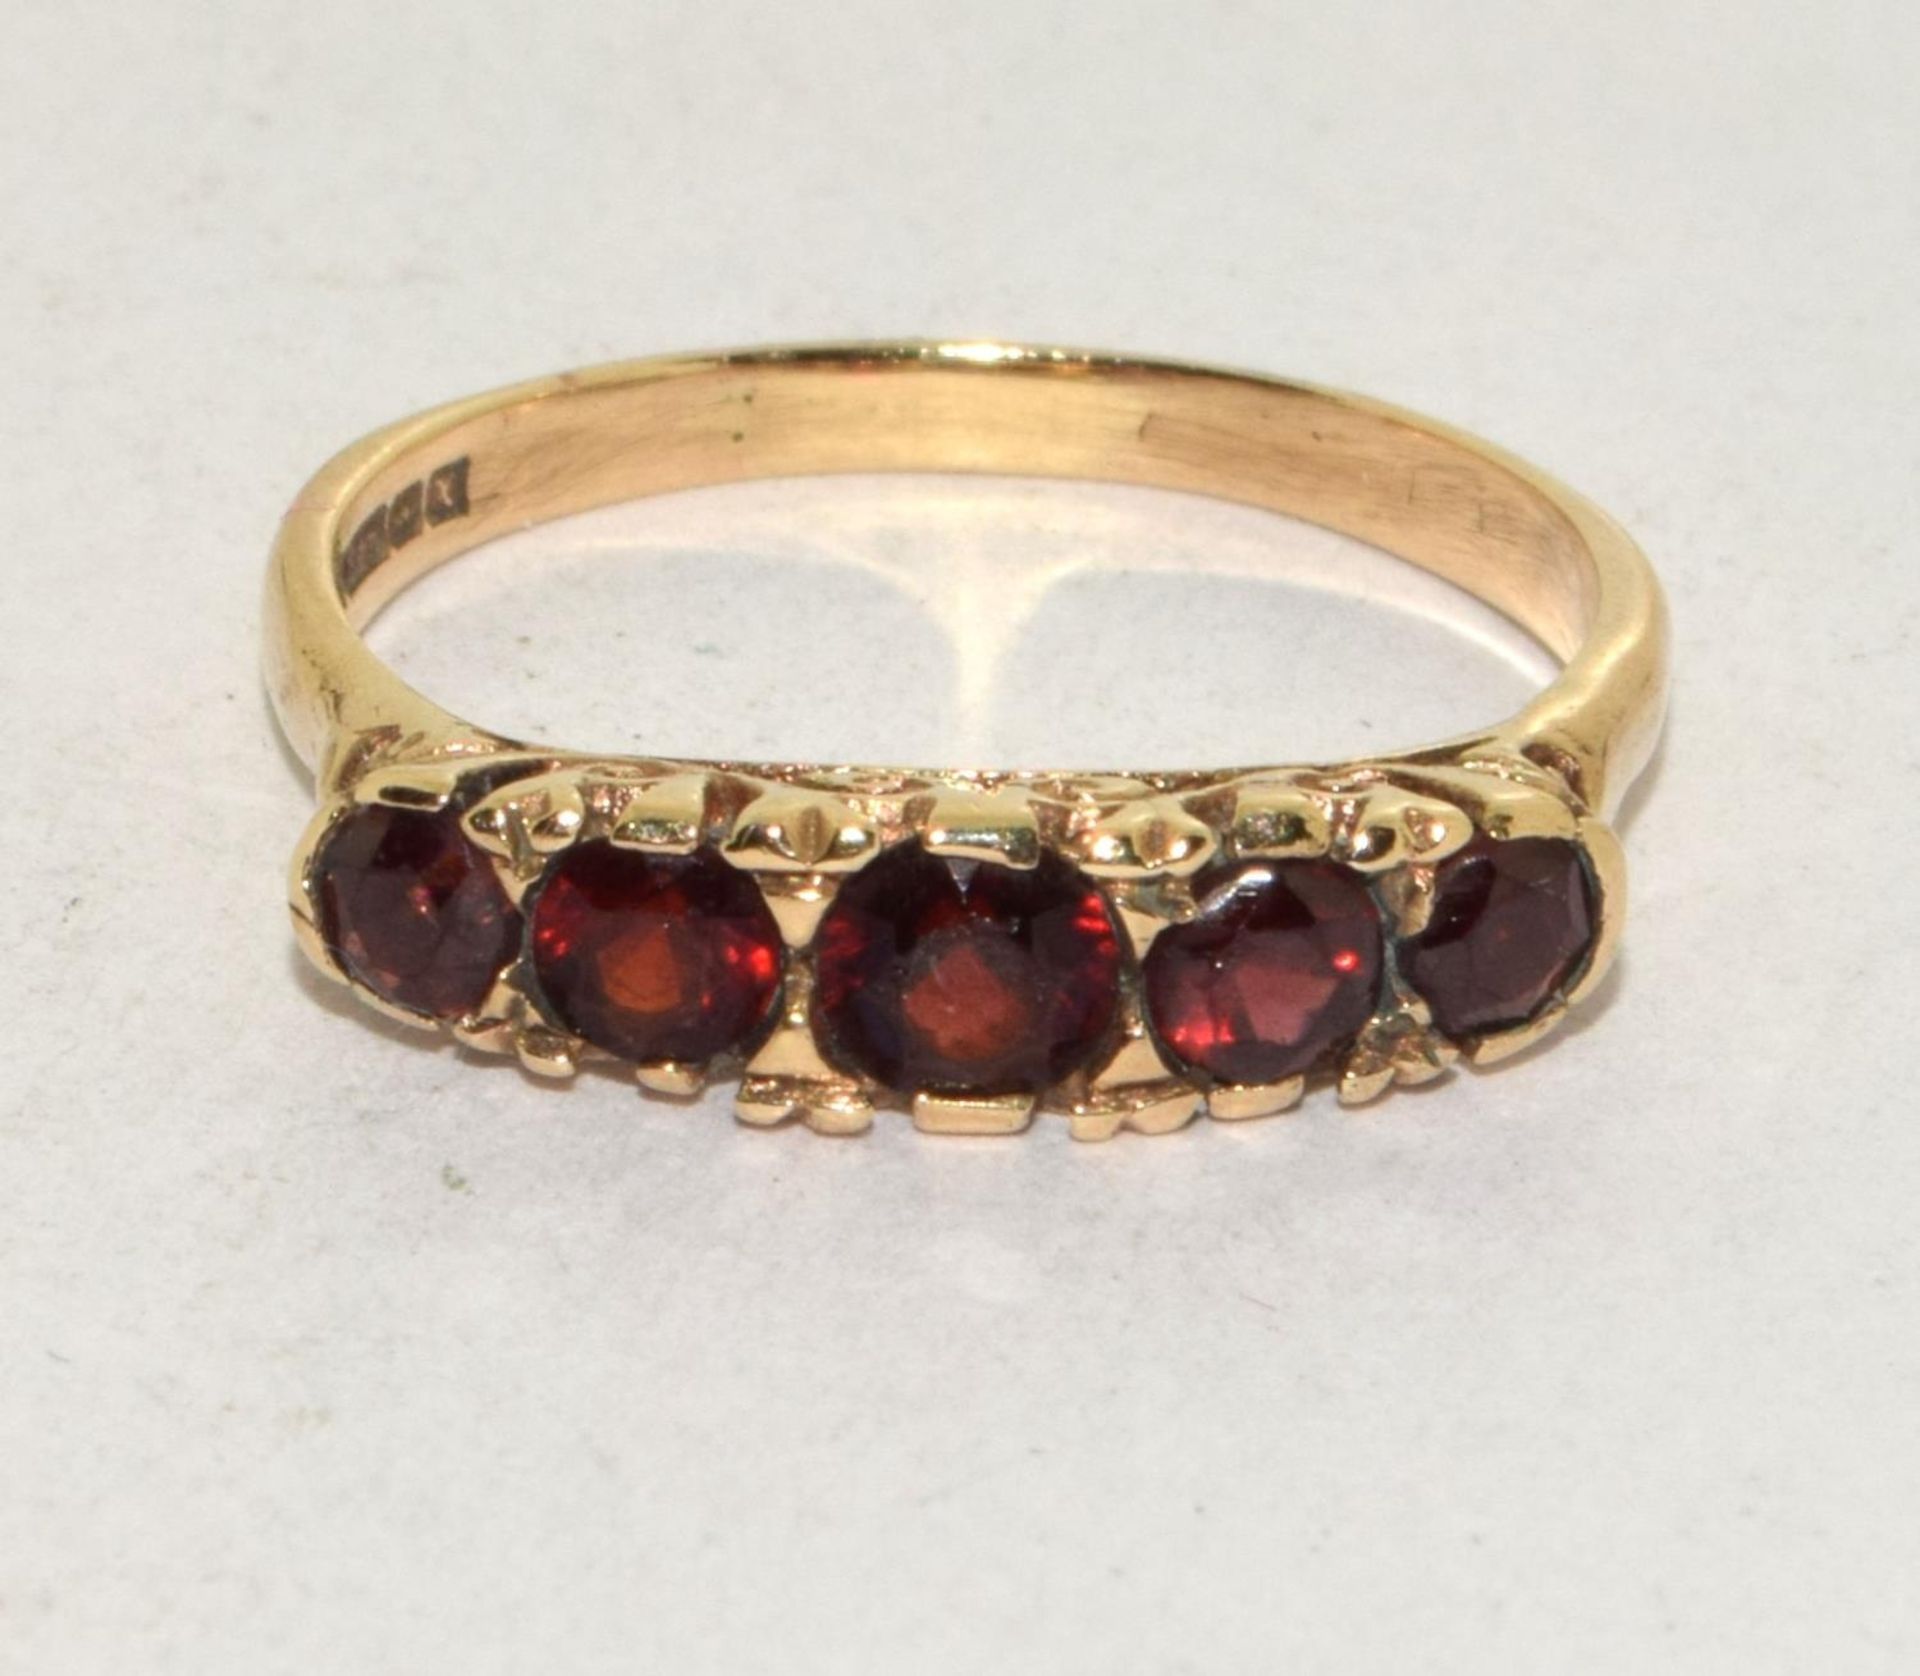 Vintage 9ct gold 5 stone Garnet ring 2.8g size Q - Image 5 of 5